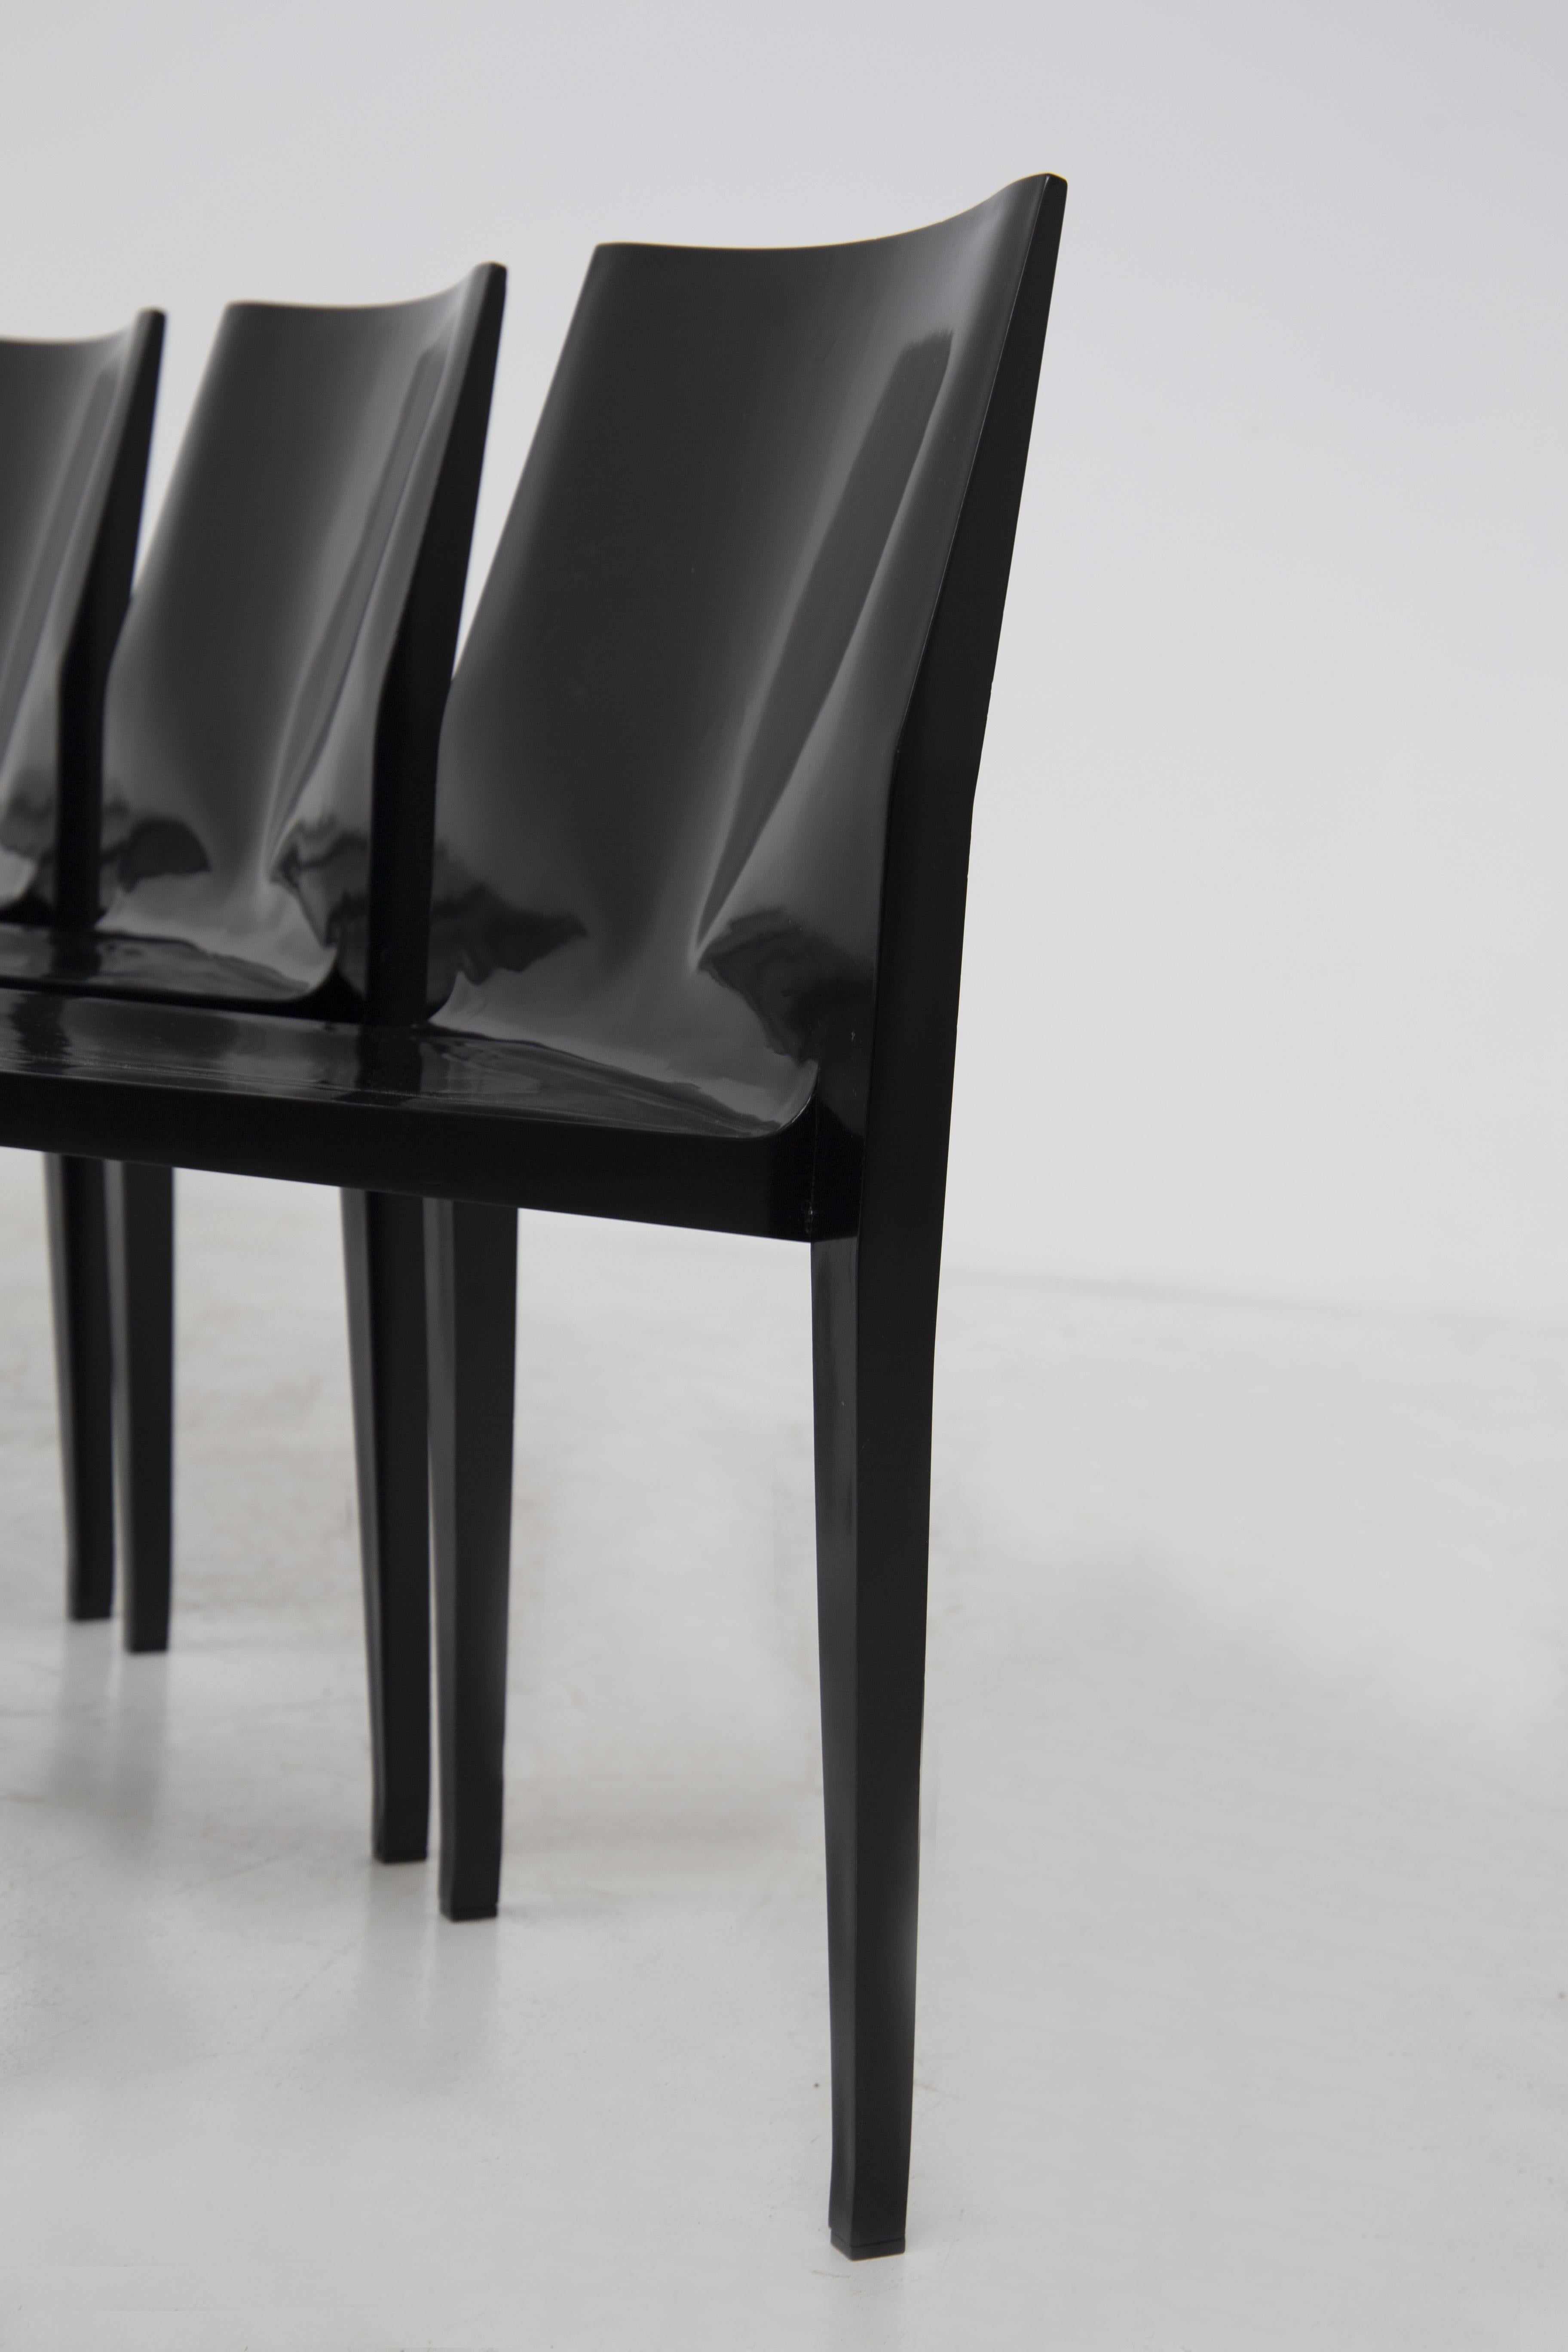 Modern Chairs Laleggera by Riccardo Blumer in Black Lacquered, 1997